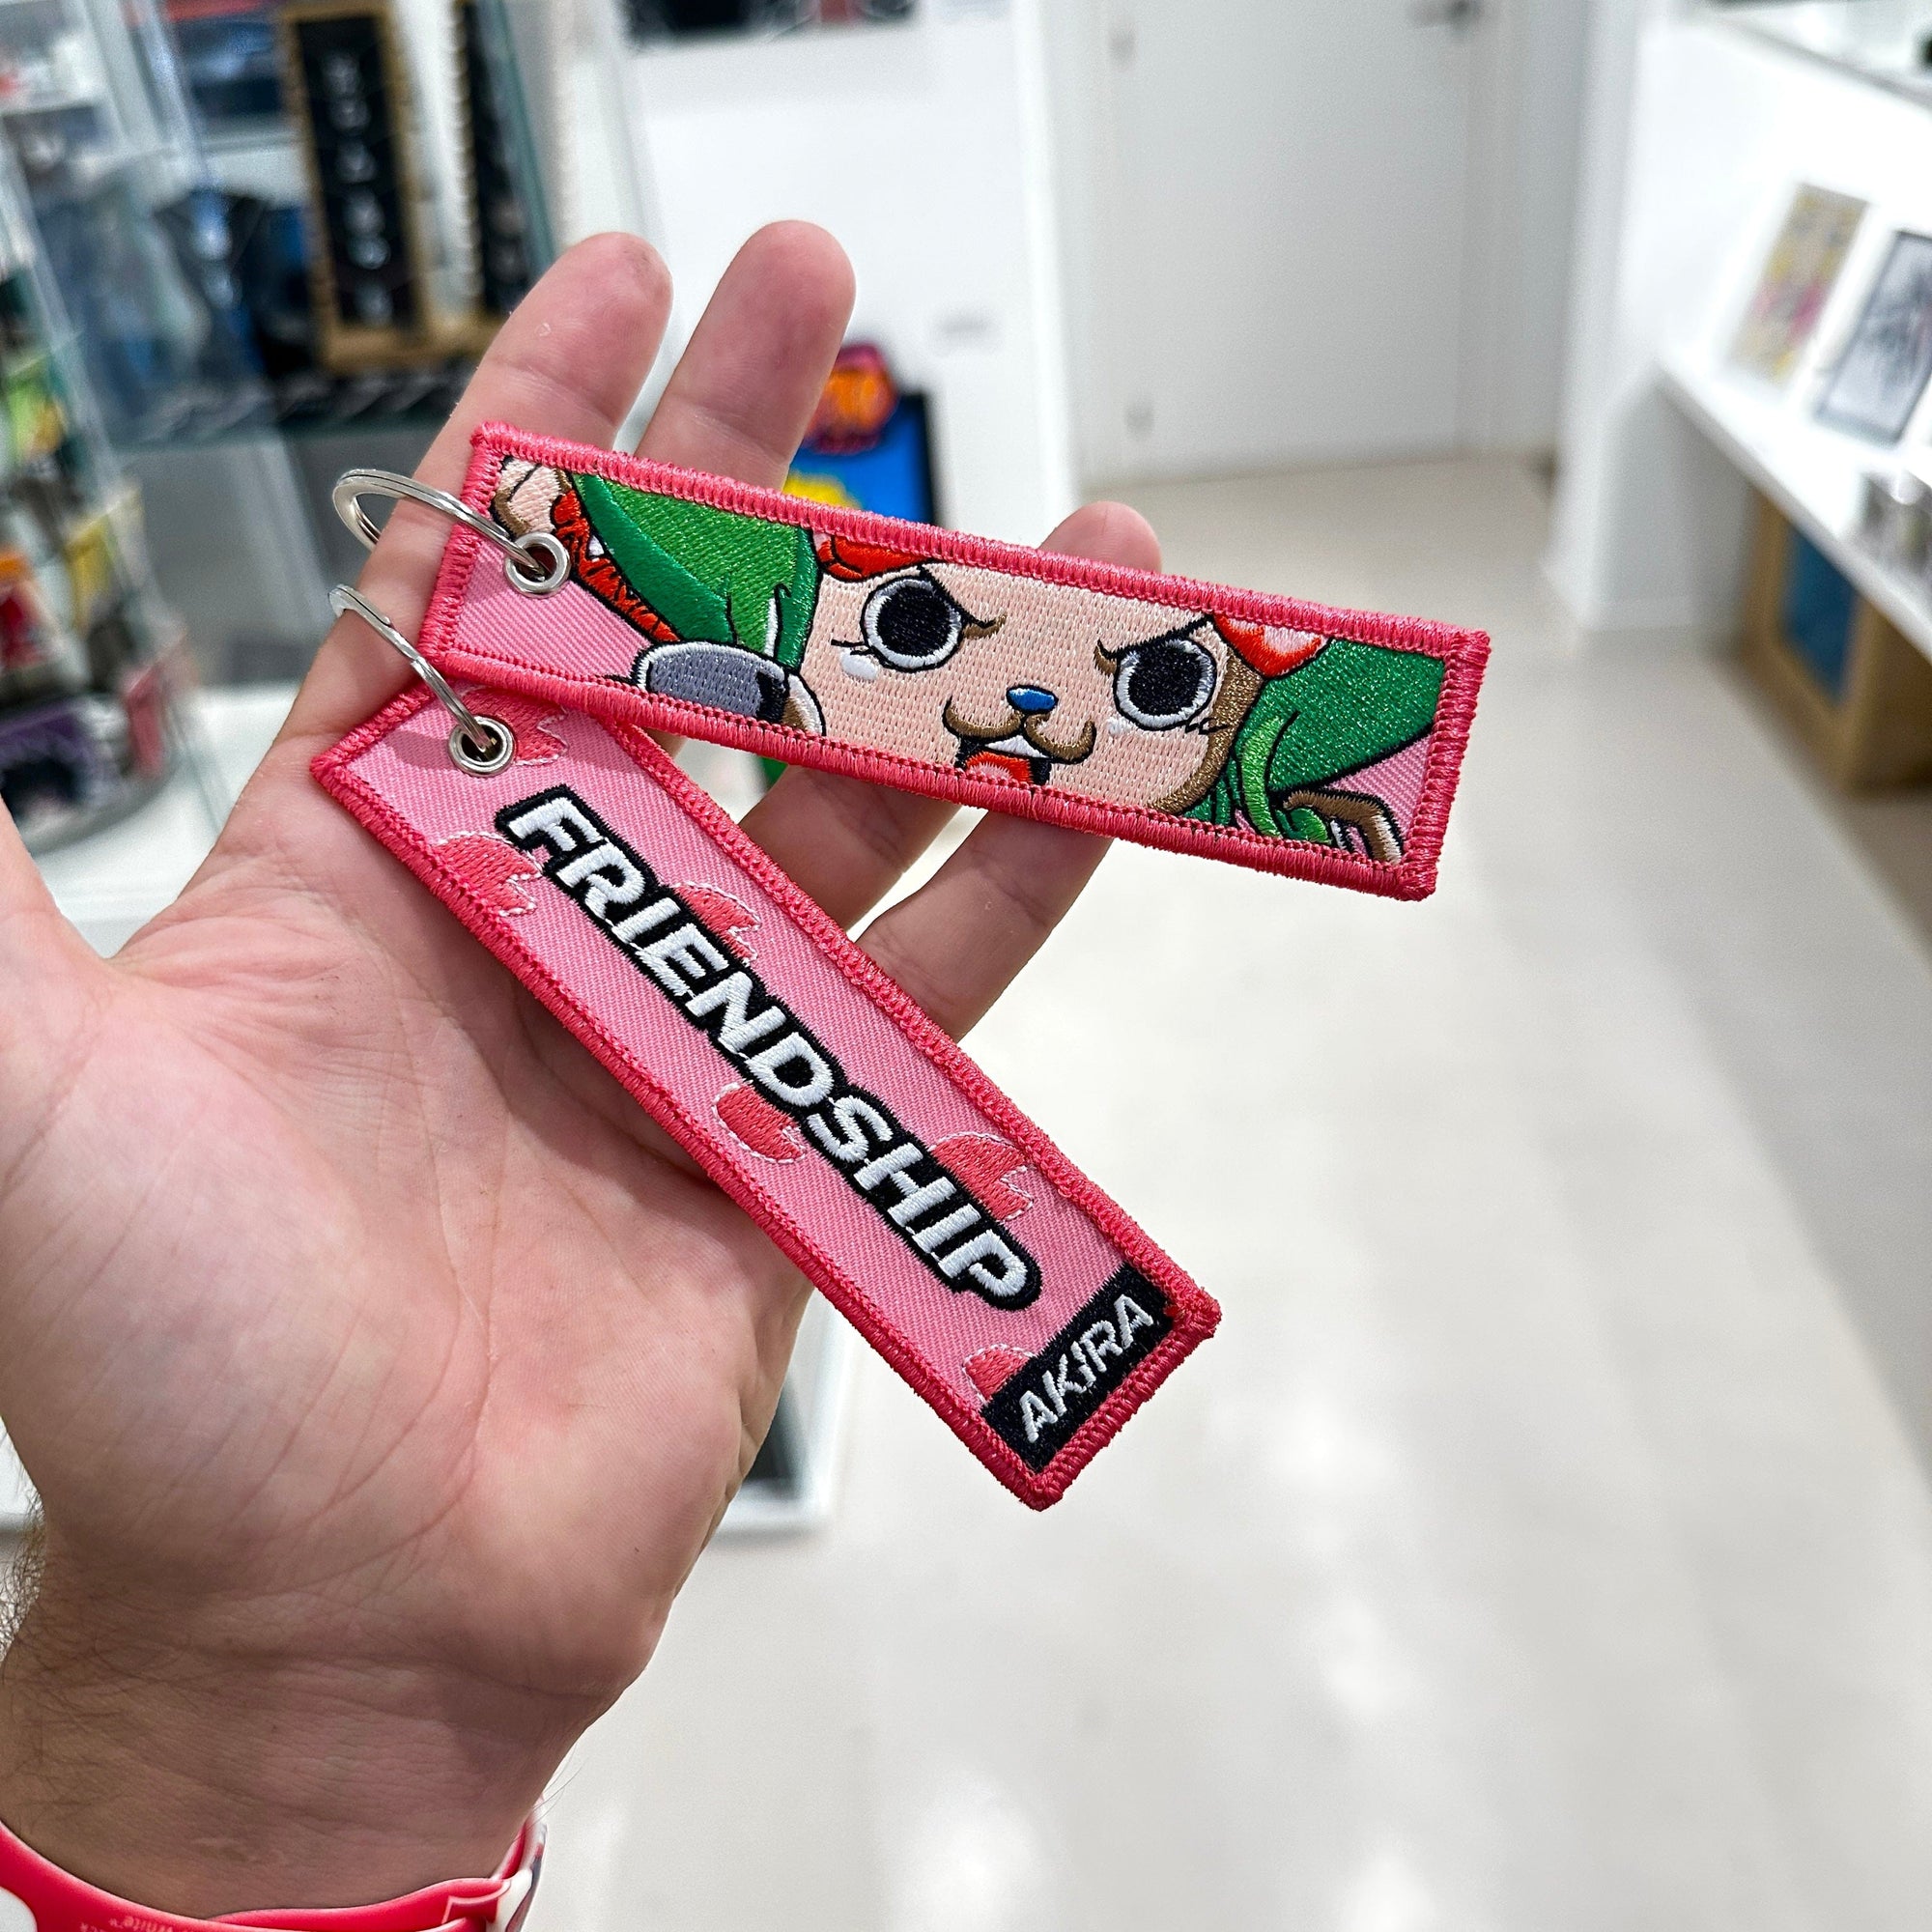 tony chopper one piece keychain anime manga jet tag keytag otaku kawaii 